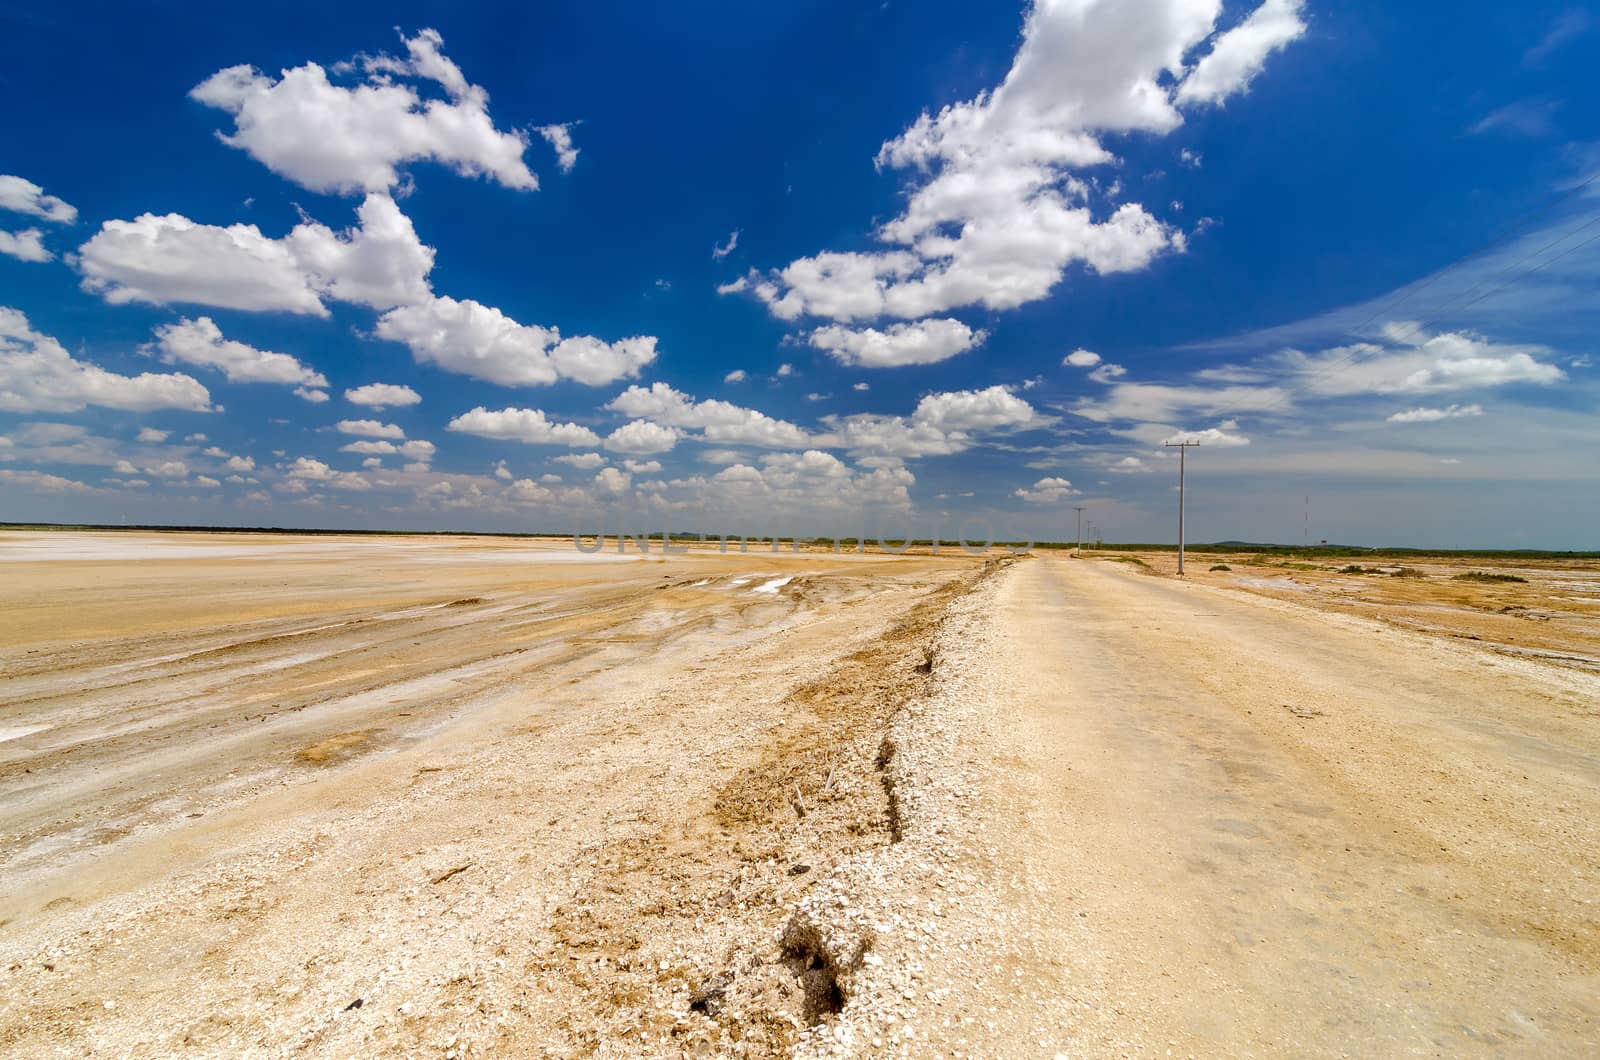 Dirt Road in a Desert by jkraft5